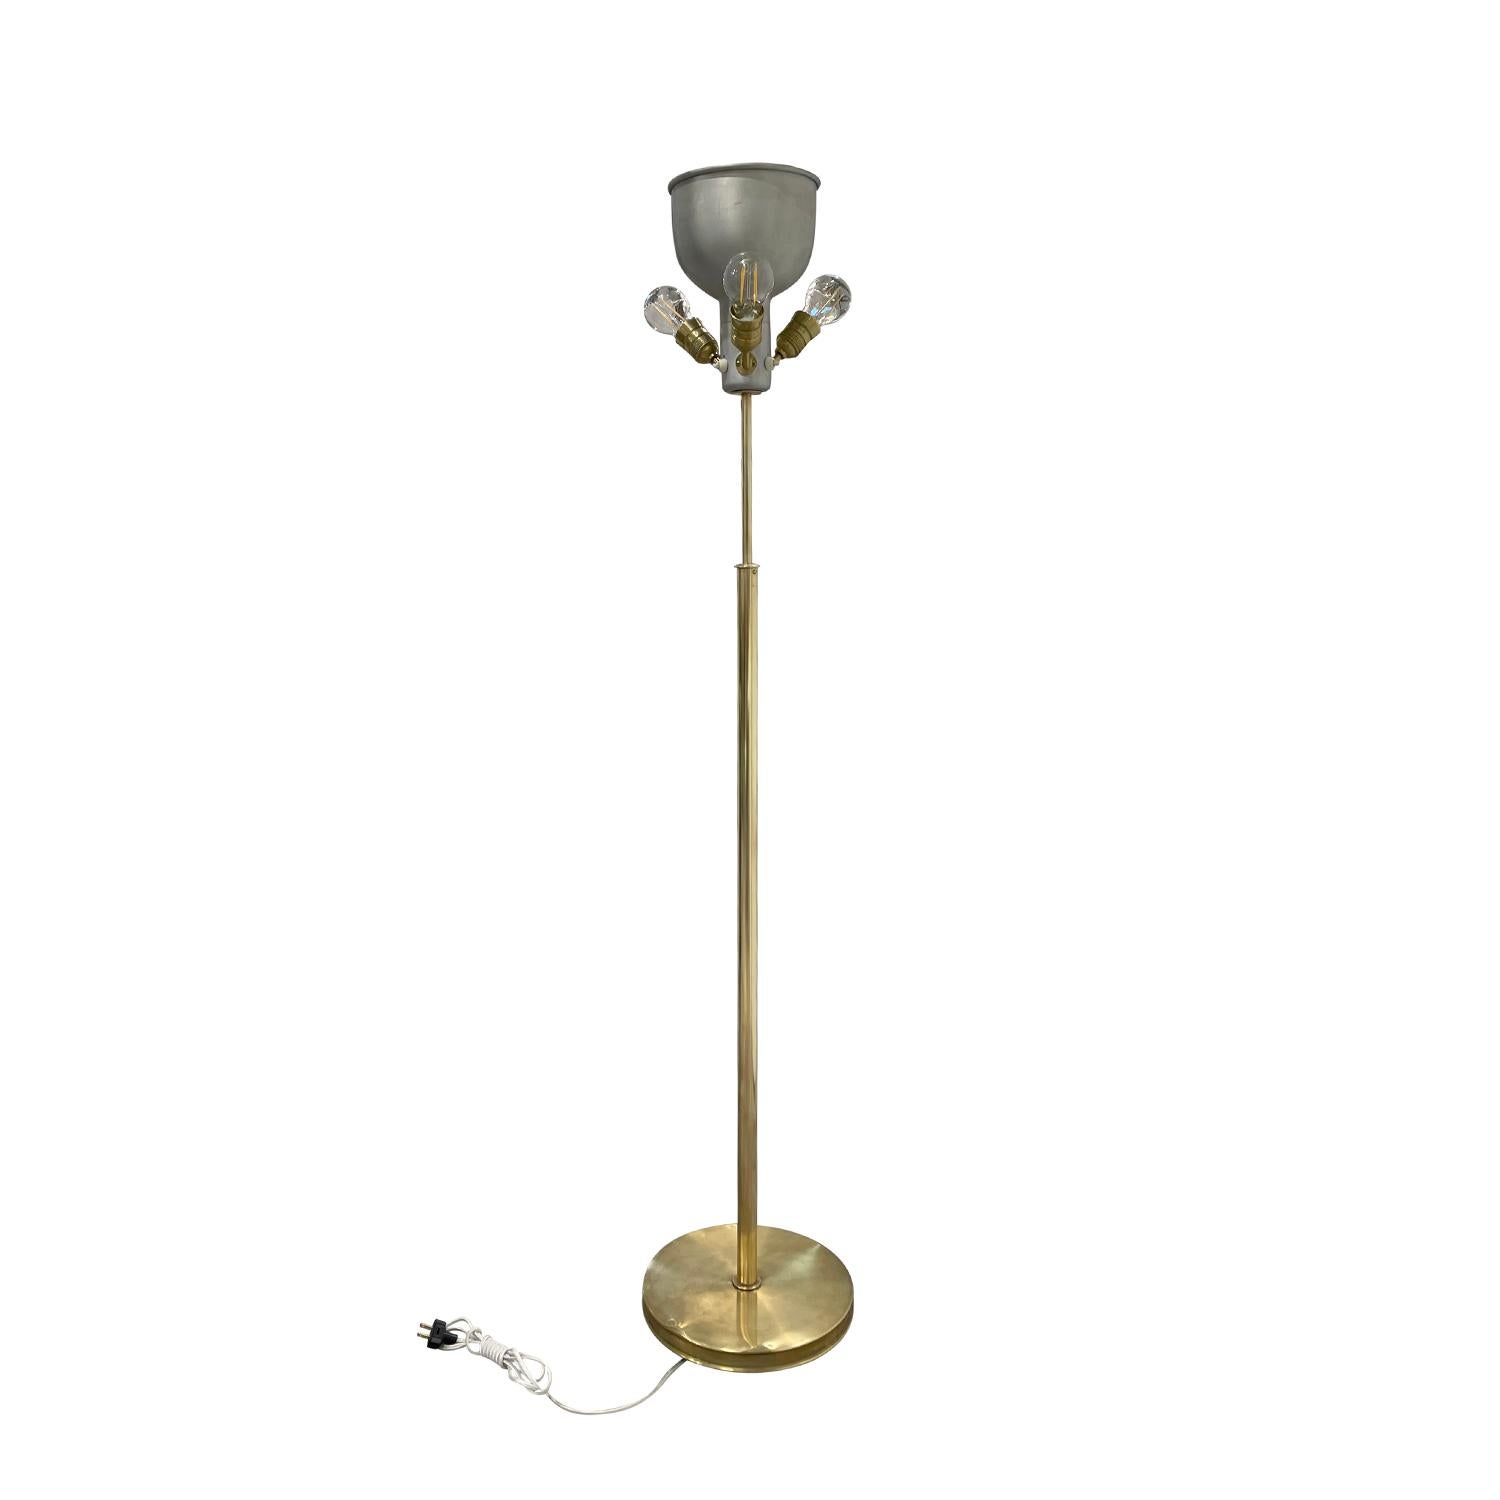 Metal 20th Century Swedish Svenskt Tenn Brass Floor Lamp, Vintage Light by Josef Frank For Sale